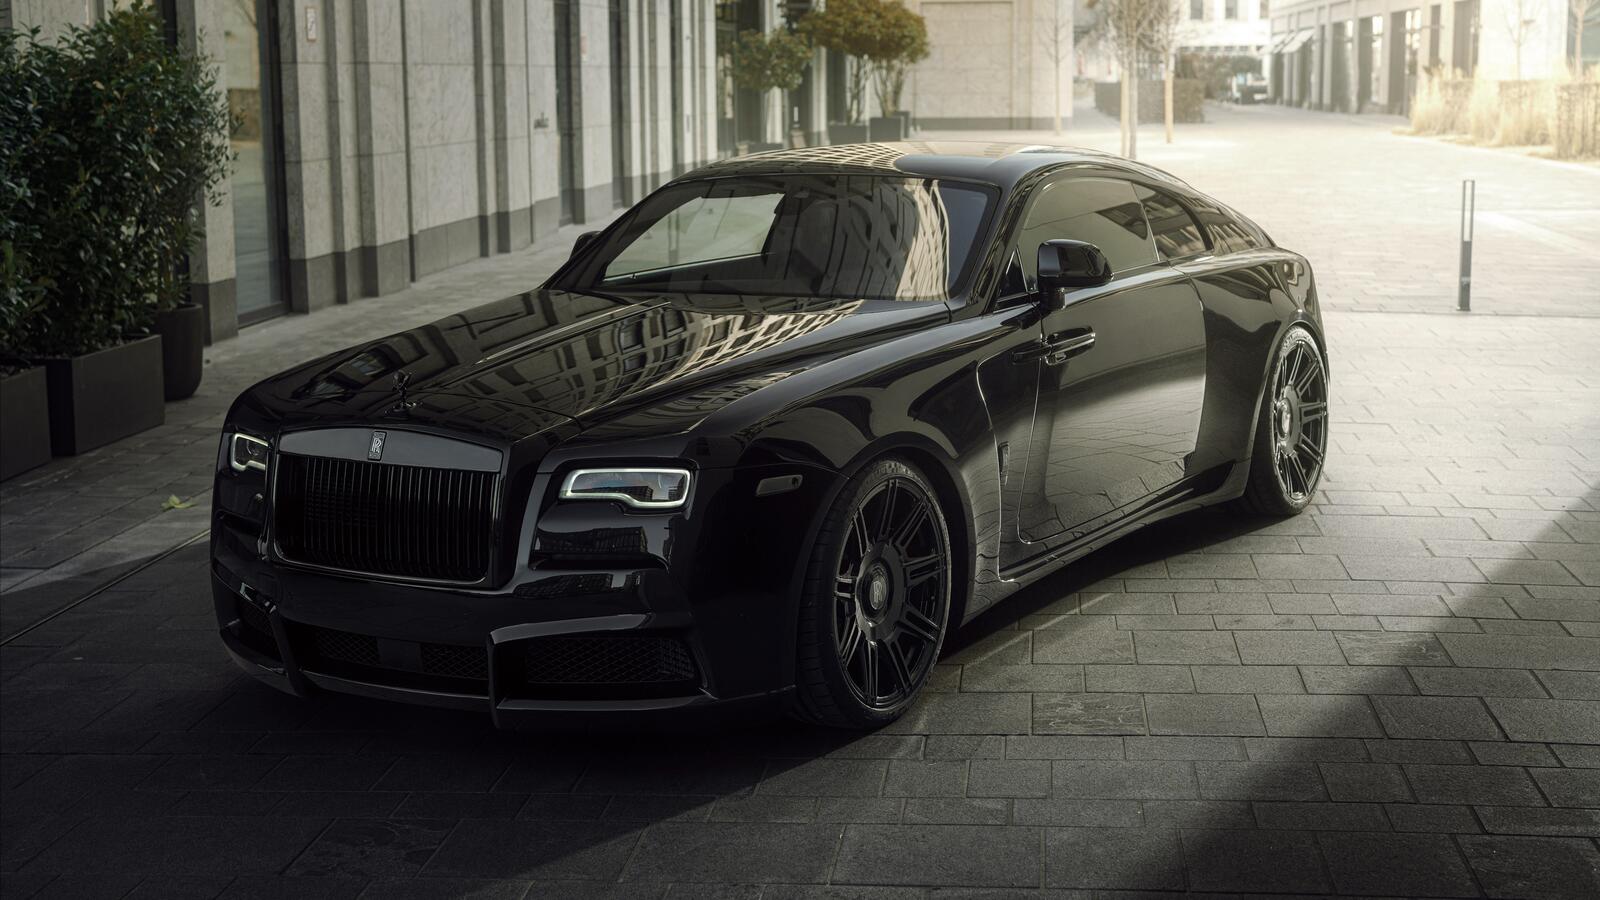 Free photo The stylish Rolls Royce Wraith